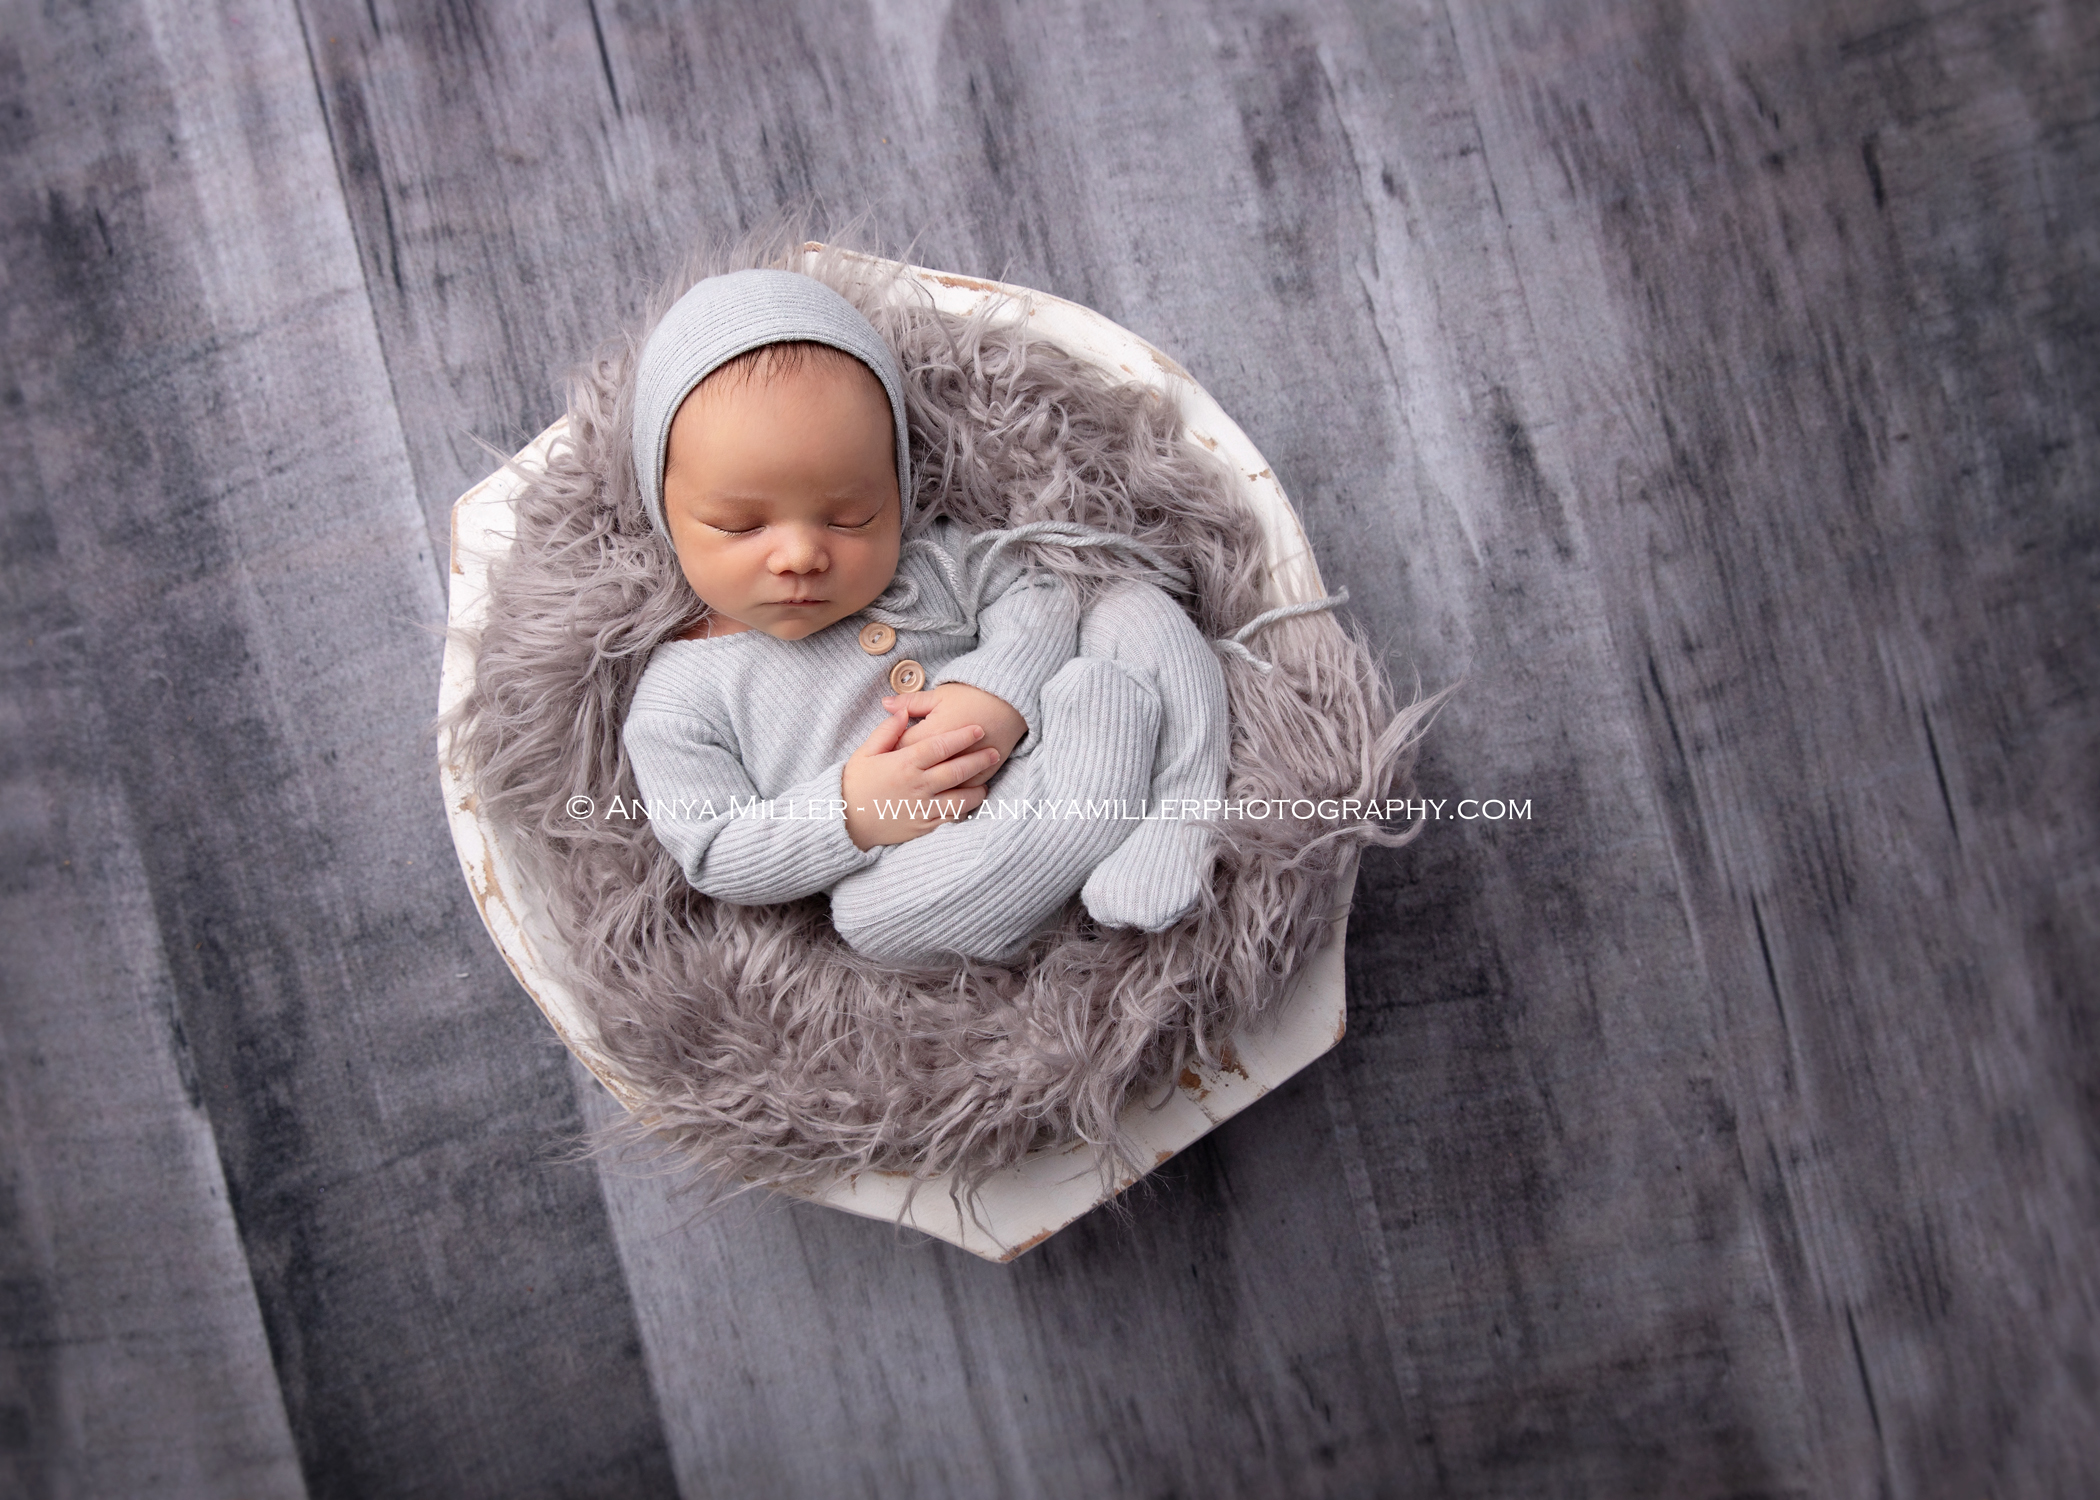 Portraits of newborn baby boy by Toronto newborn photographer Annya Miller 